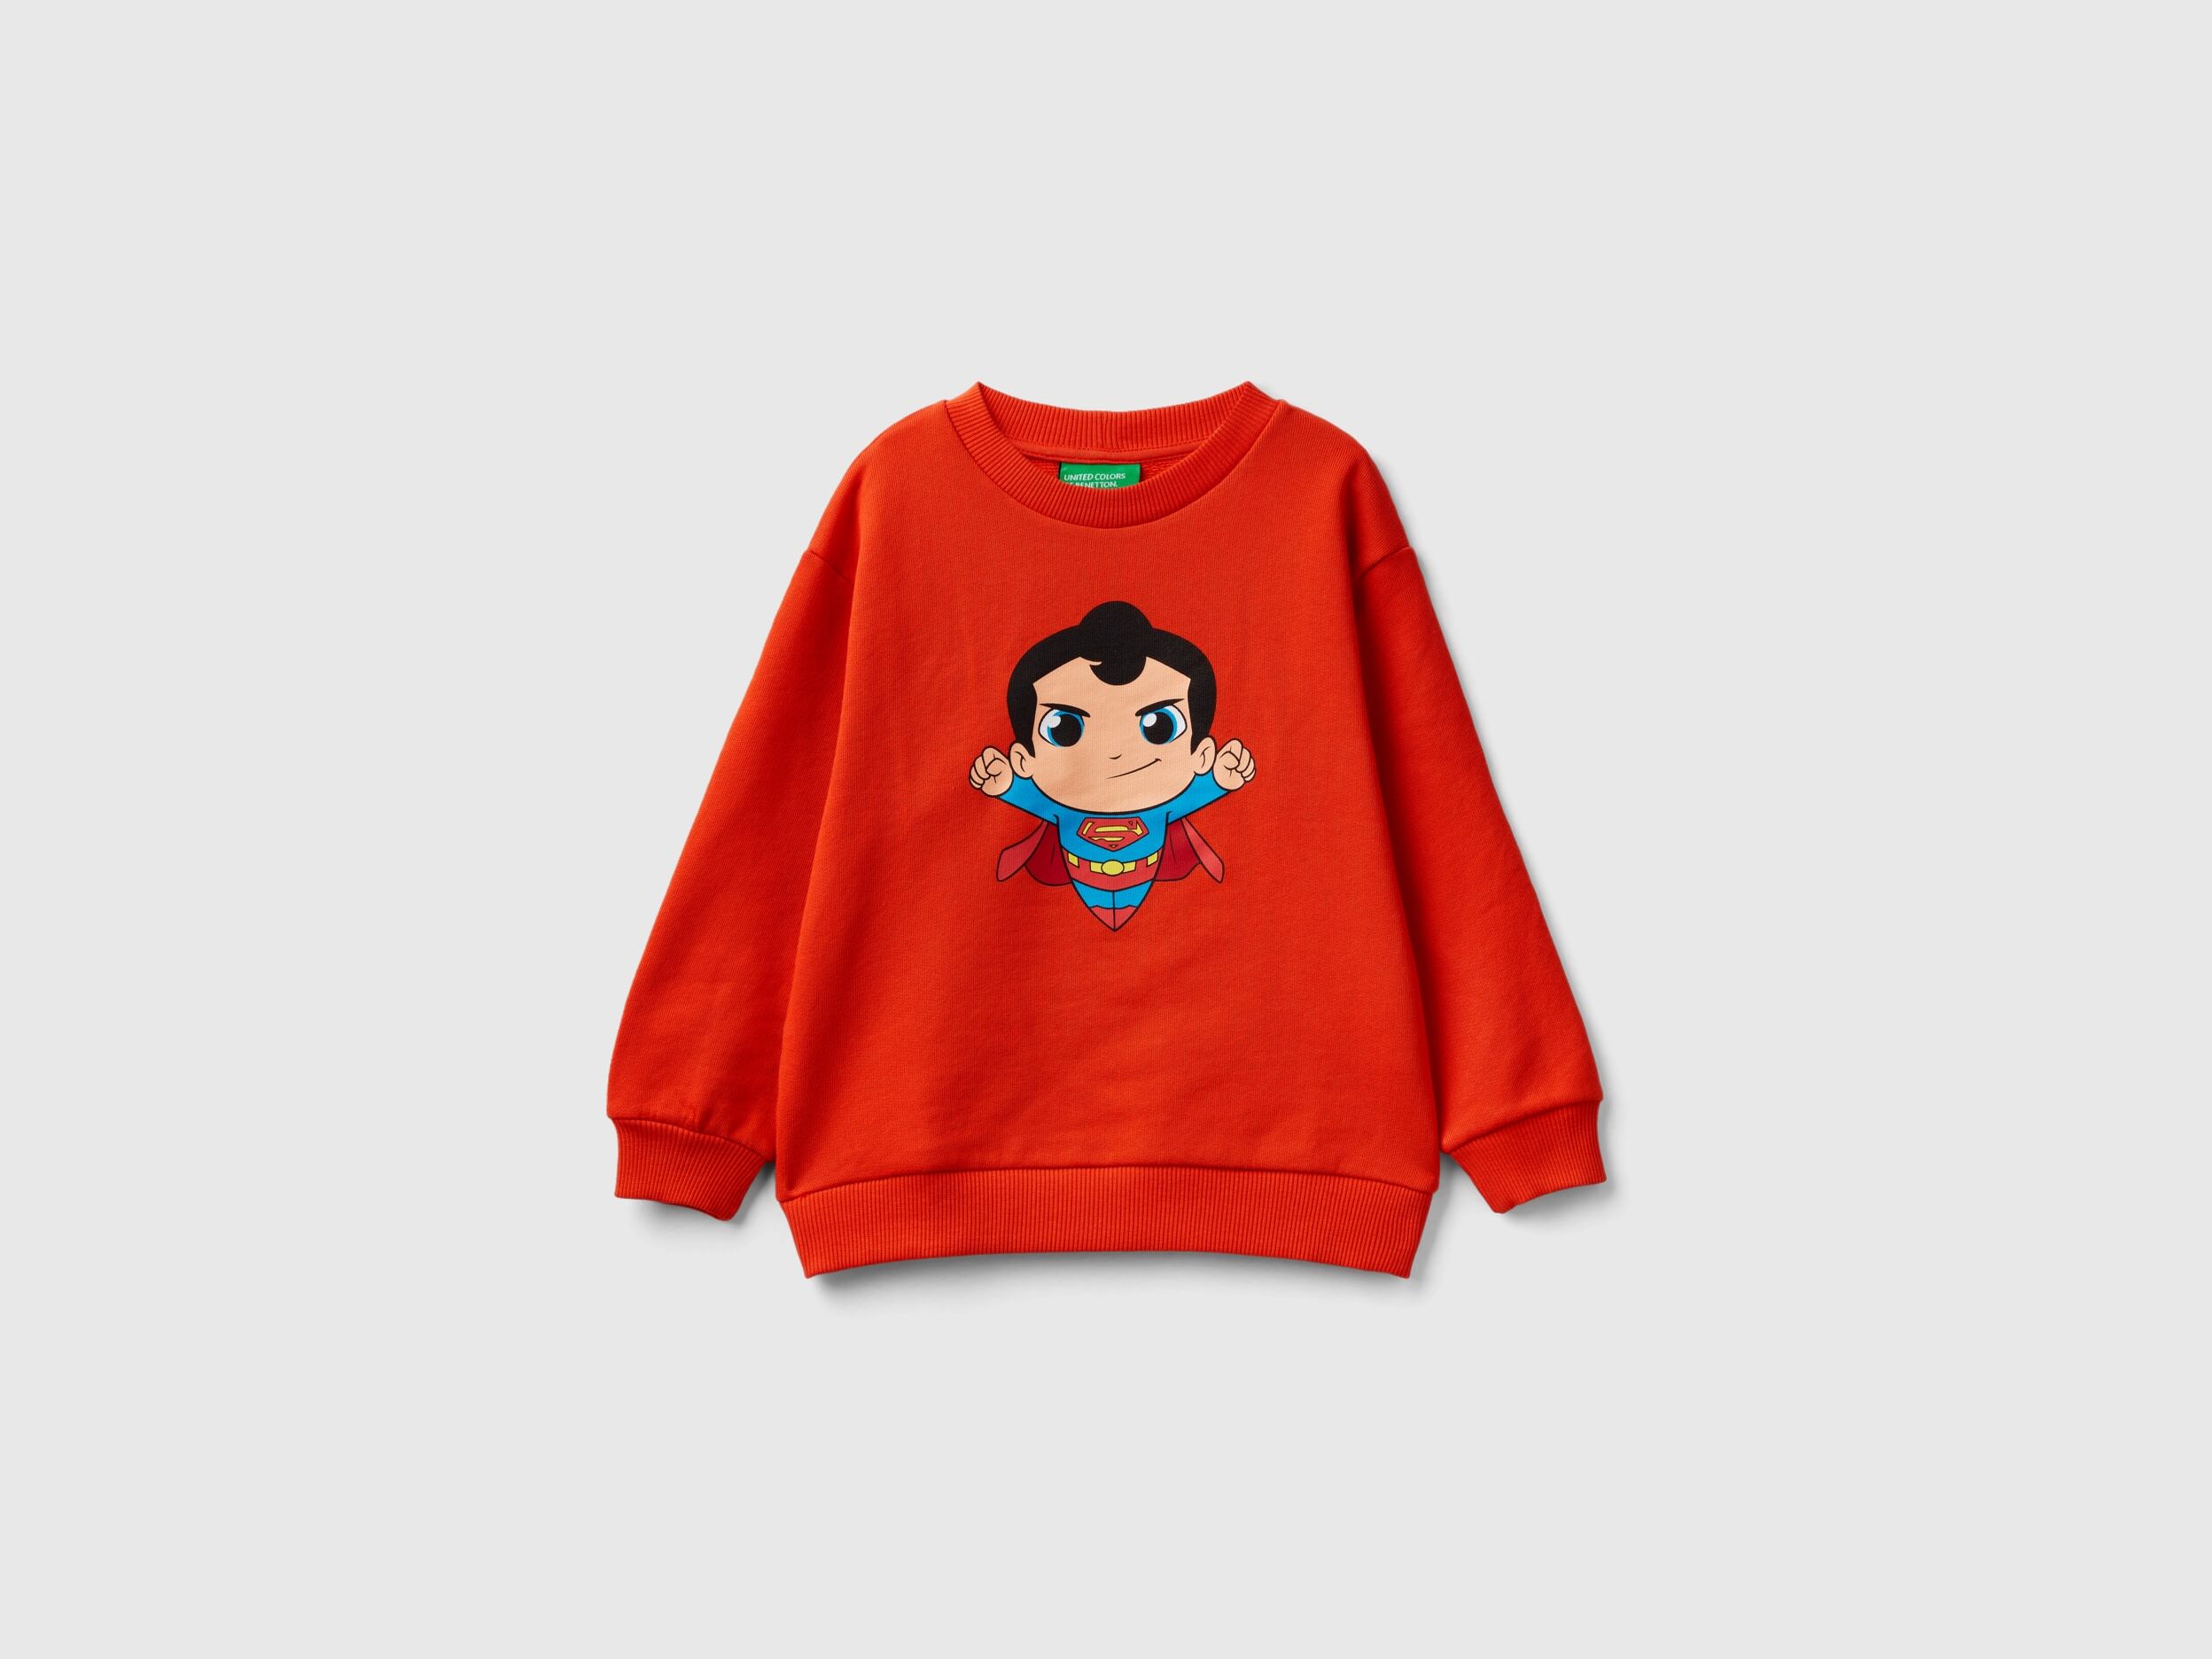 United Benetton, Red Superman ©&™ Dc Comics Sweatshirt, size 3-4, Red, Kids